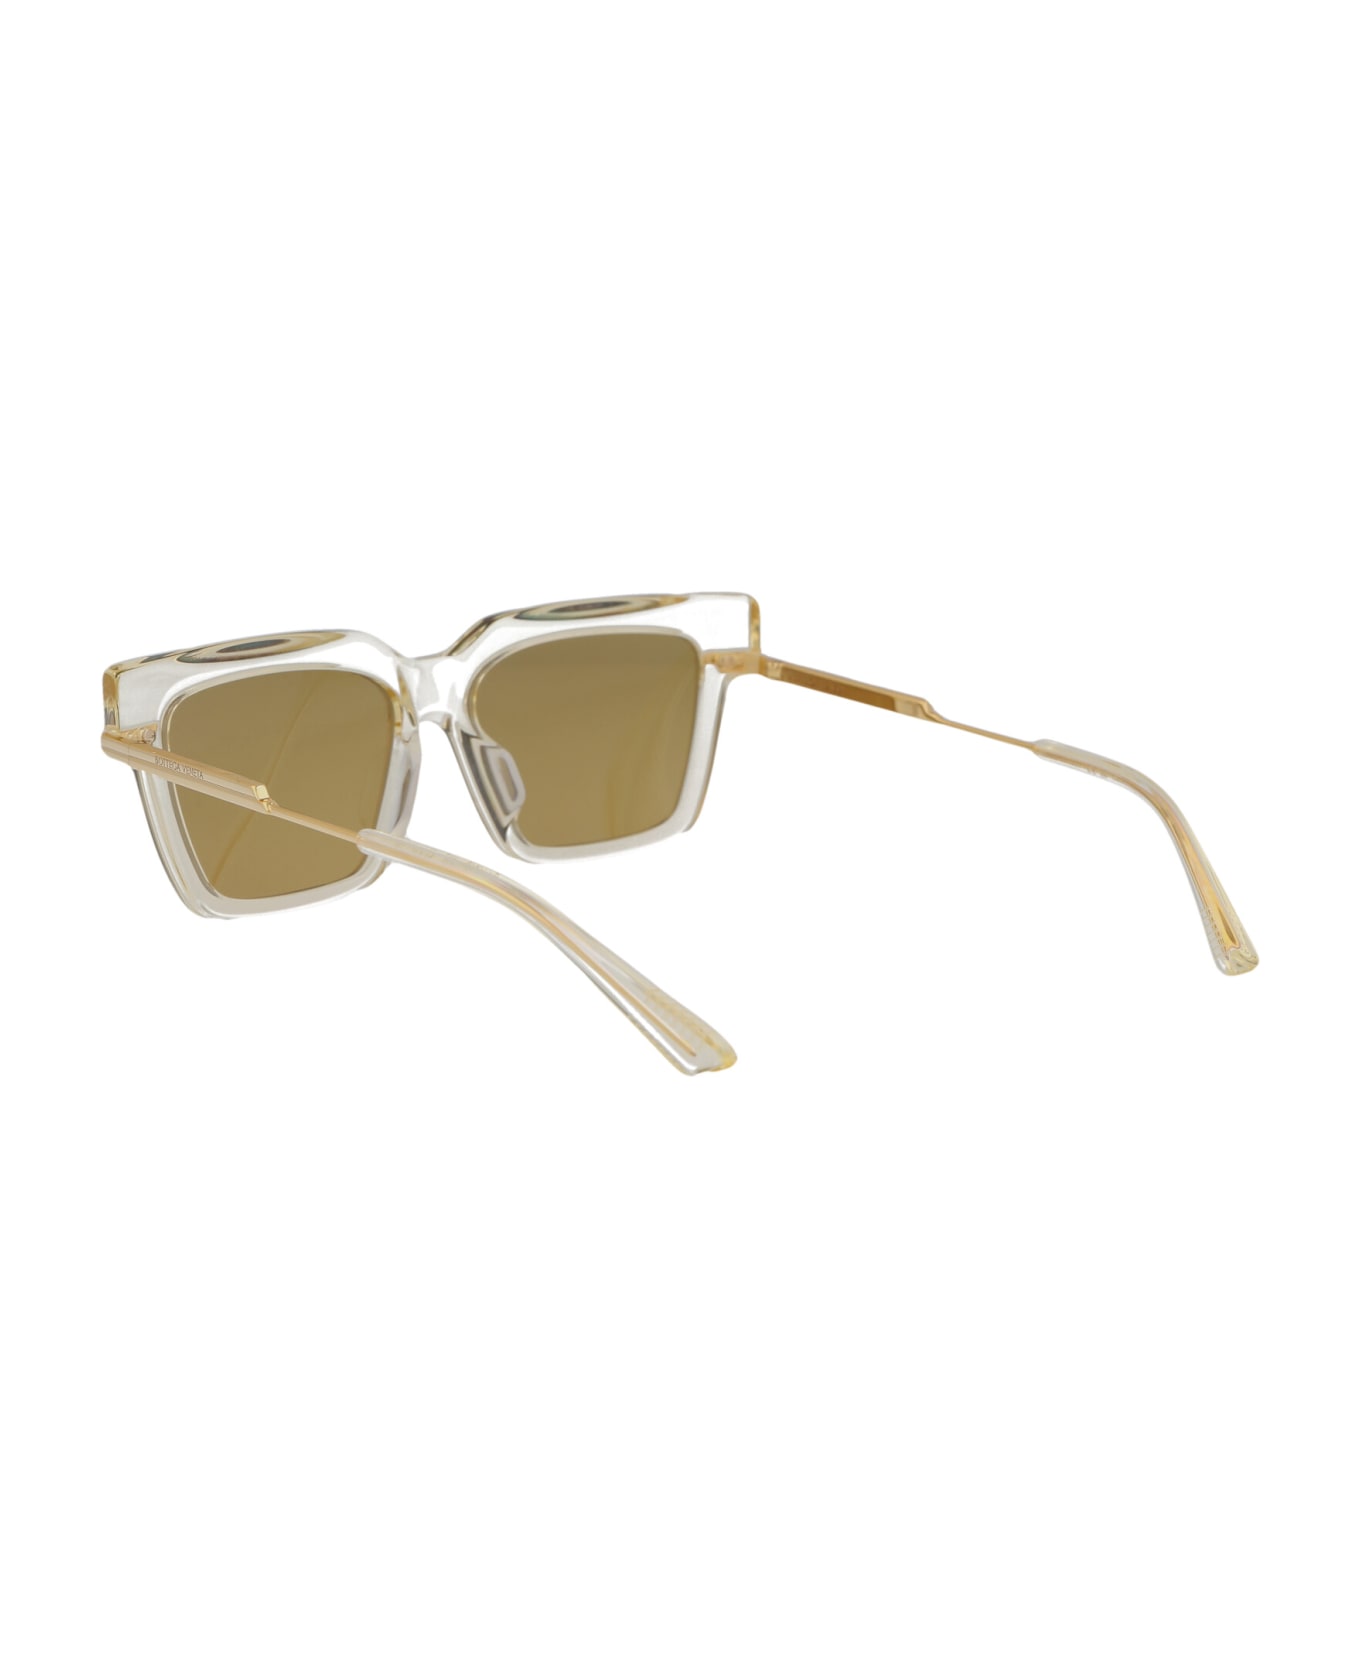 Bottega Veneta Eyewear Bv1242s Sunglasses - 004 YELLOW GOLD YELLOW